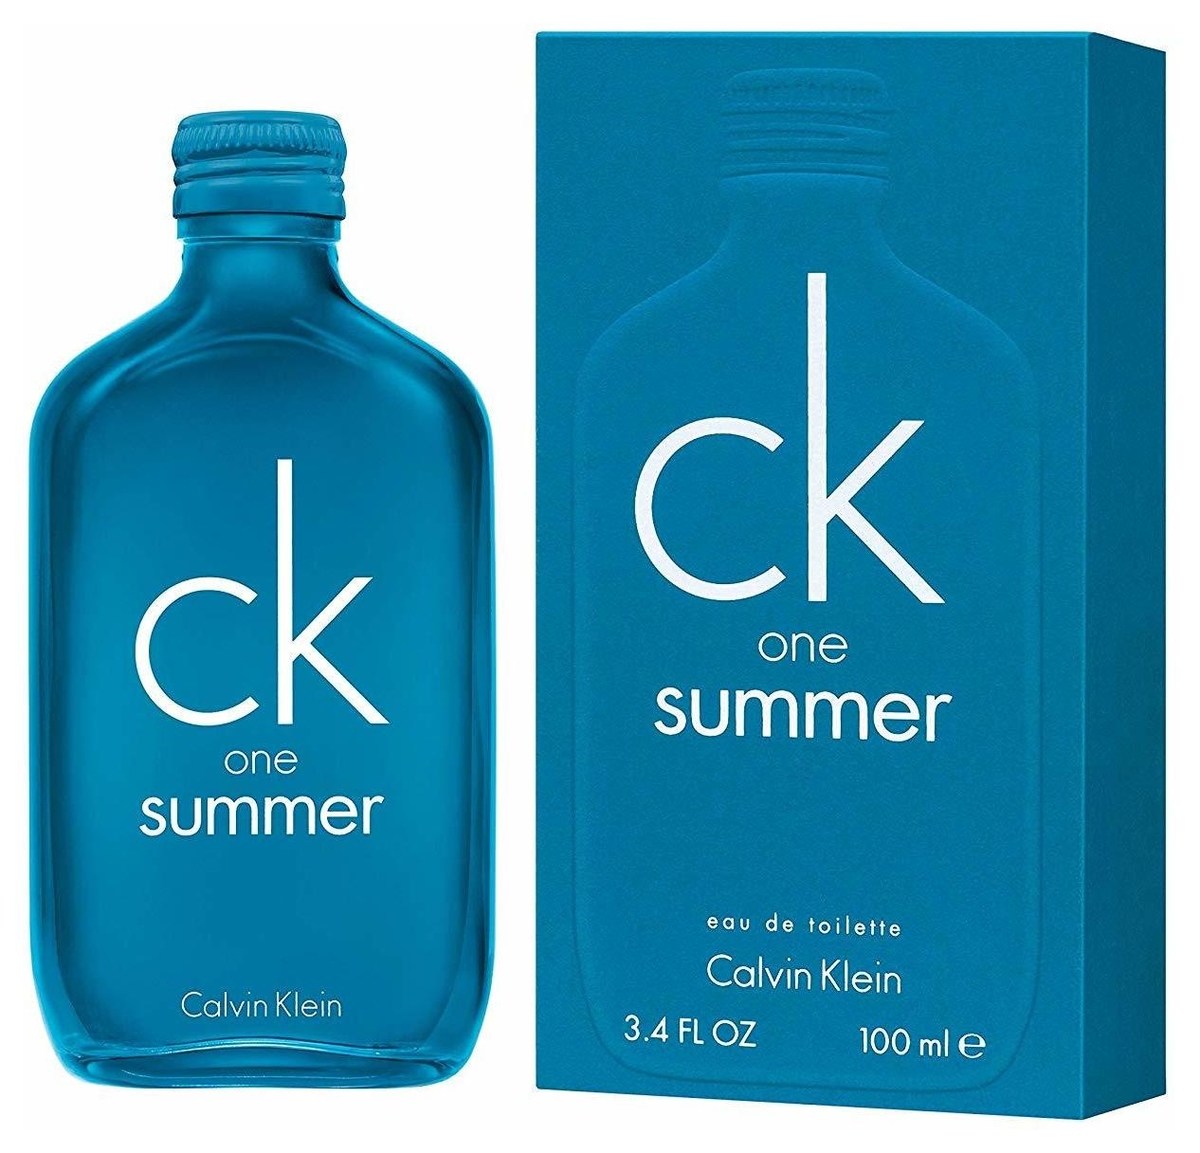 balloon Ringback Favor CK One Summer 2018 by Calvin Klein » Reviews & Perfume Facts